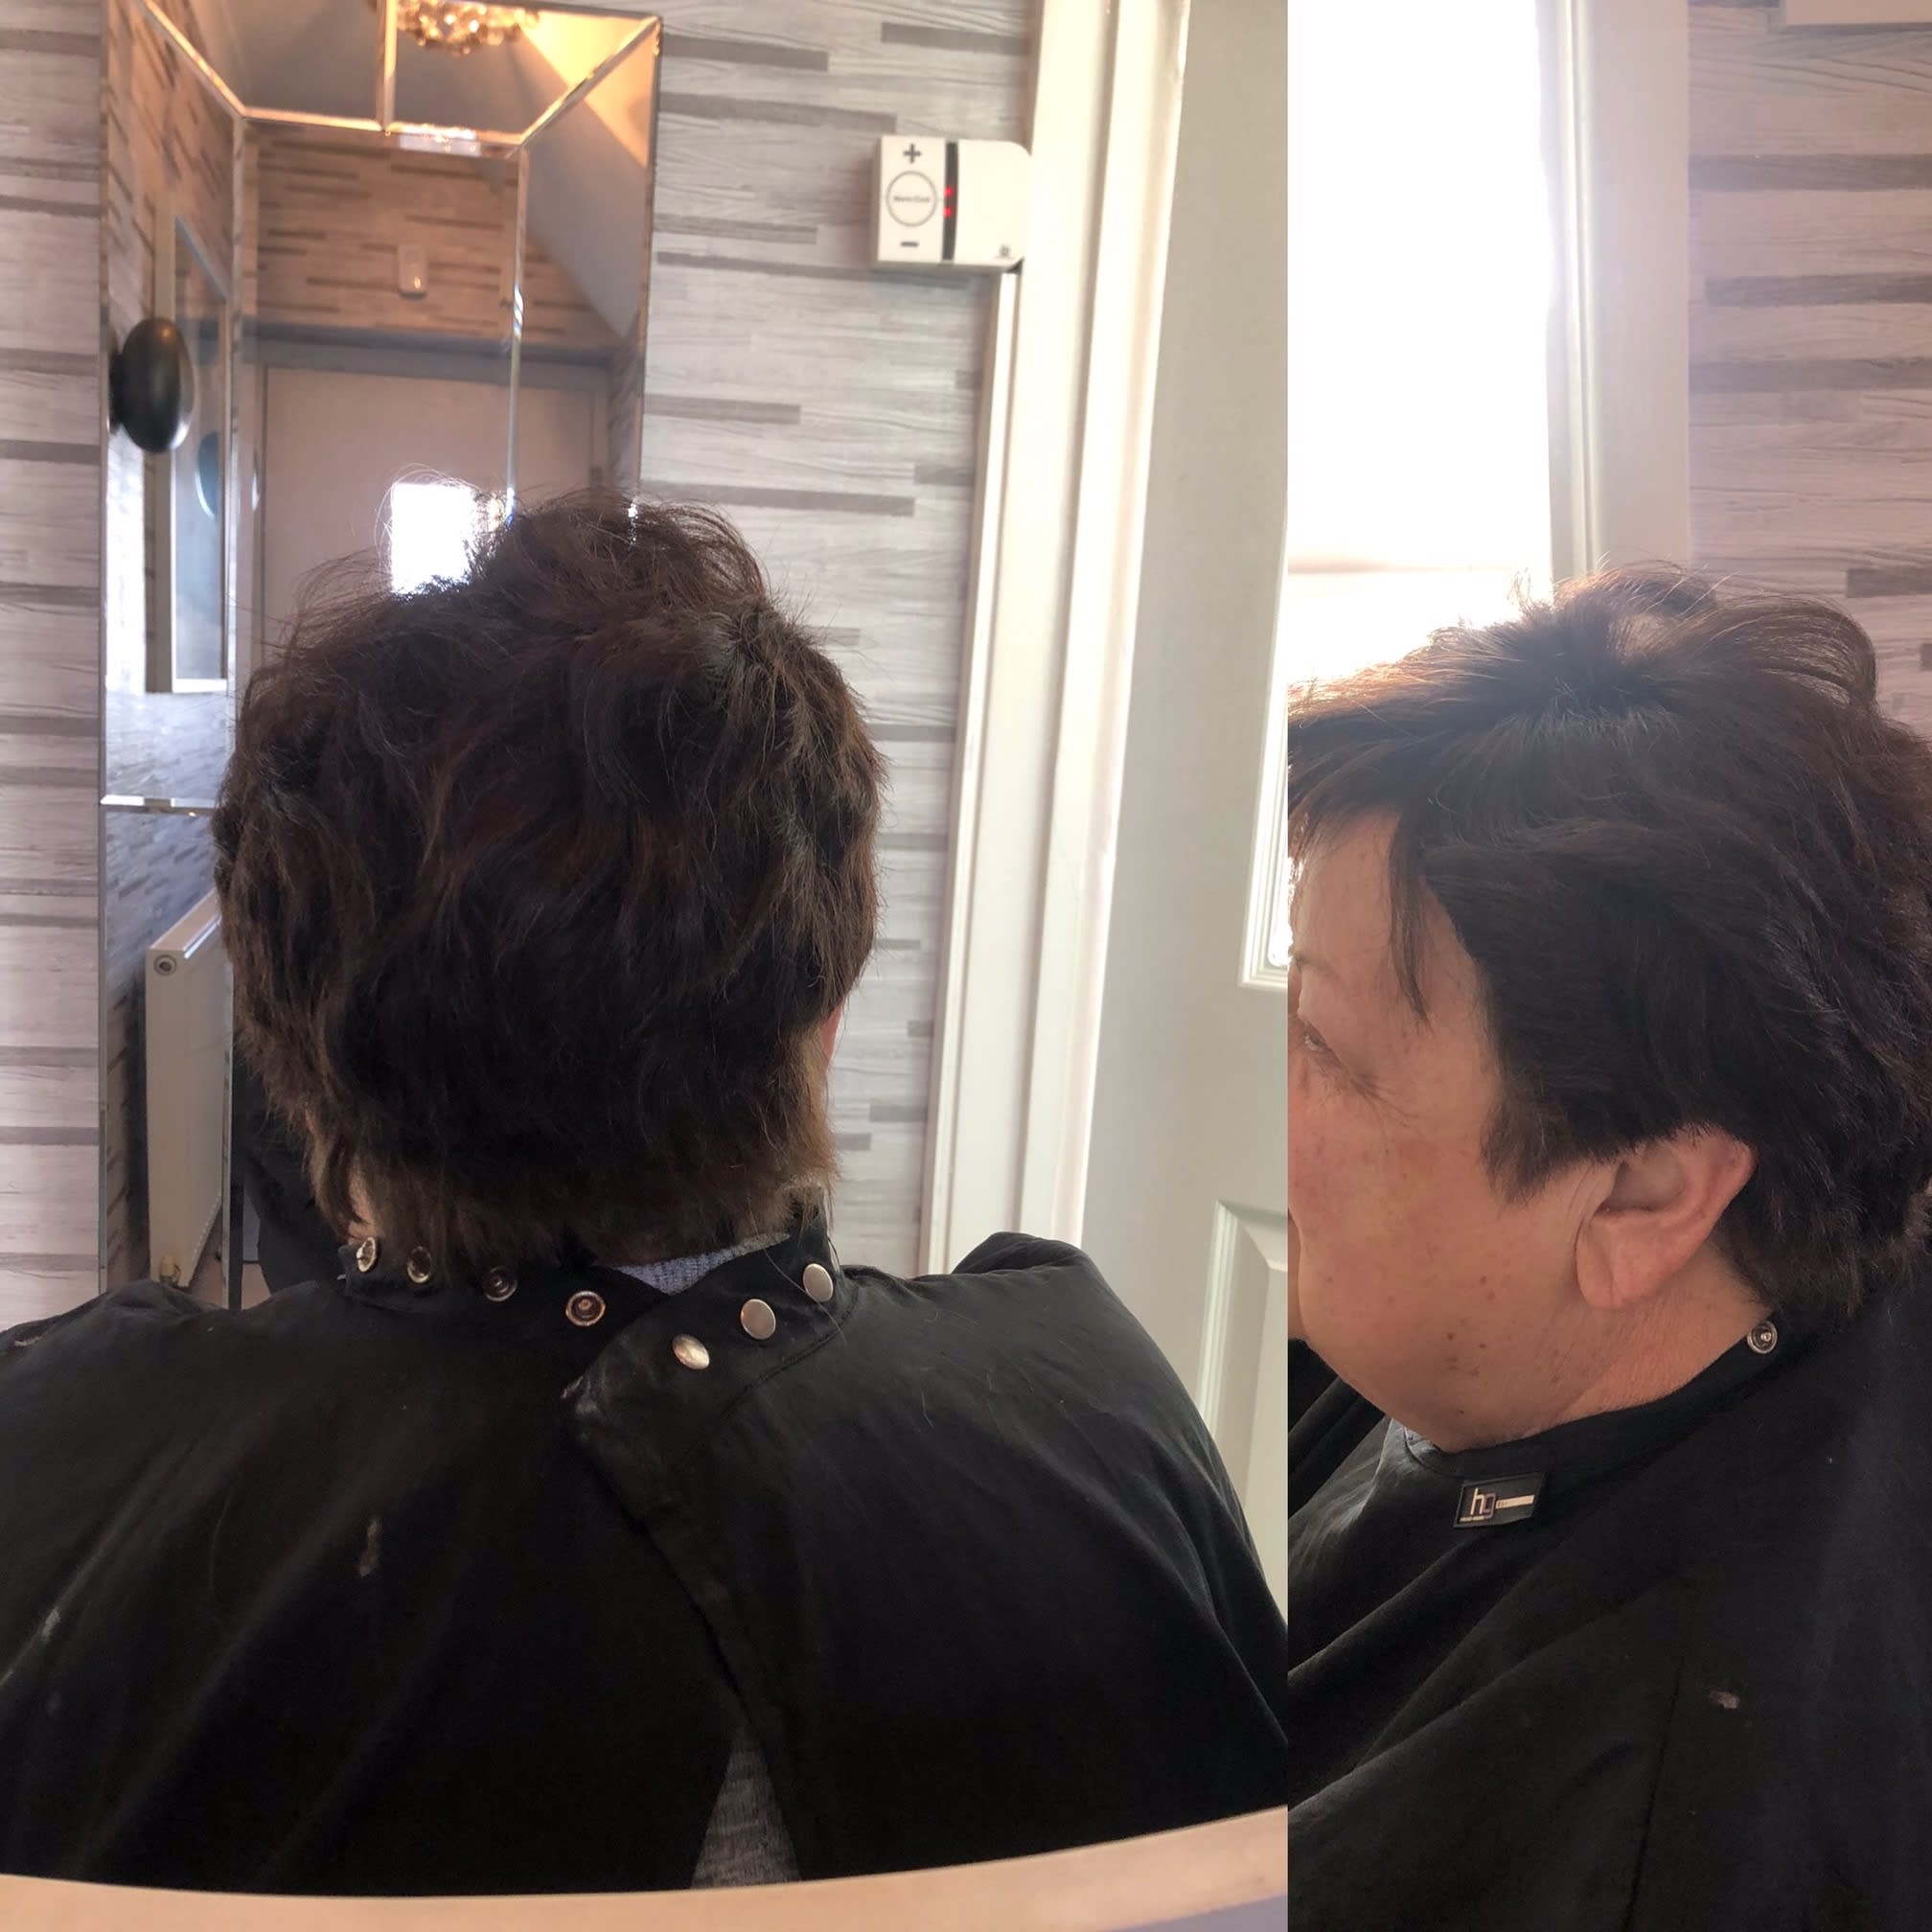 Images Adele Hair Loss Technician /Hairdresser